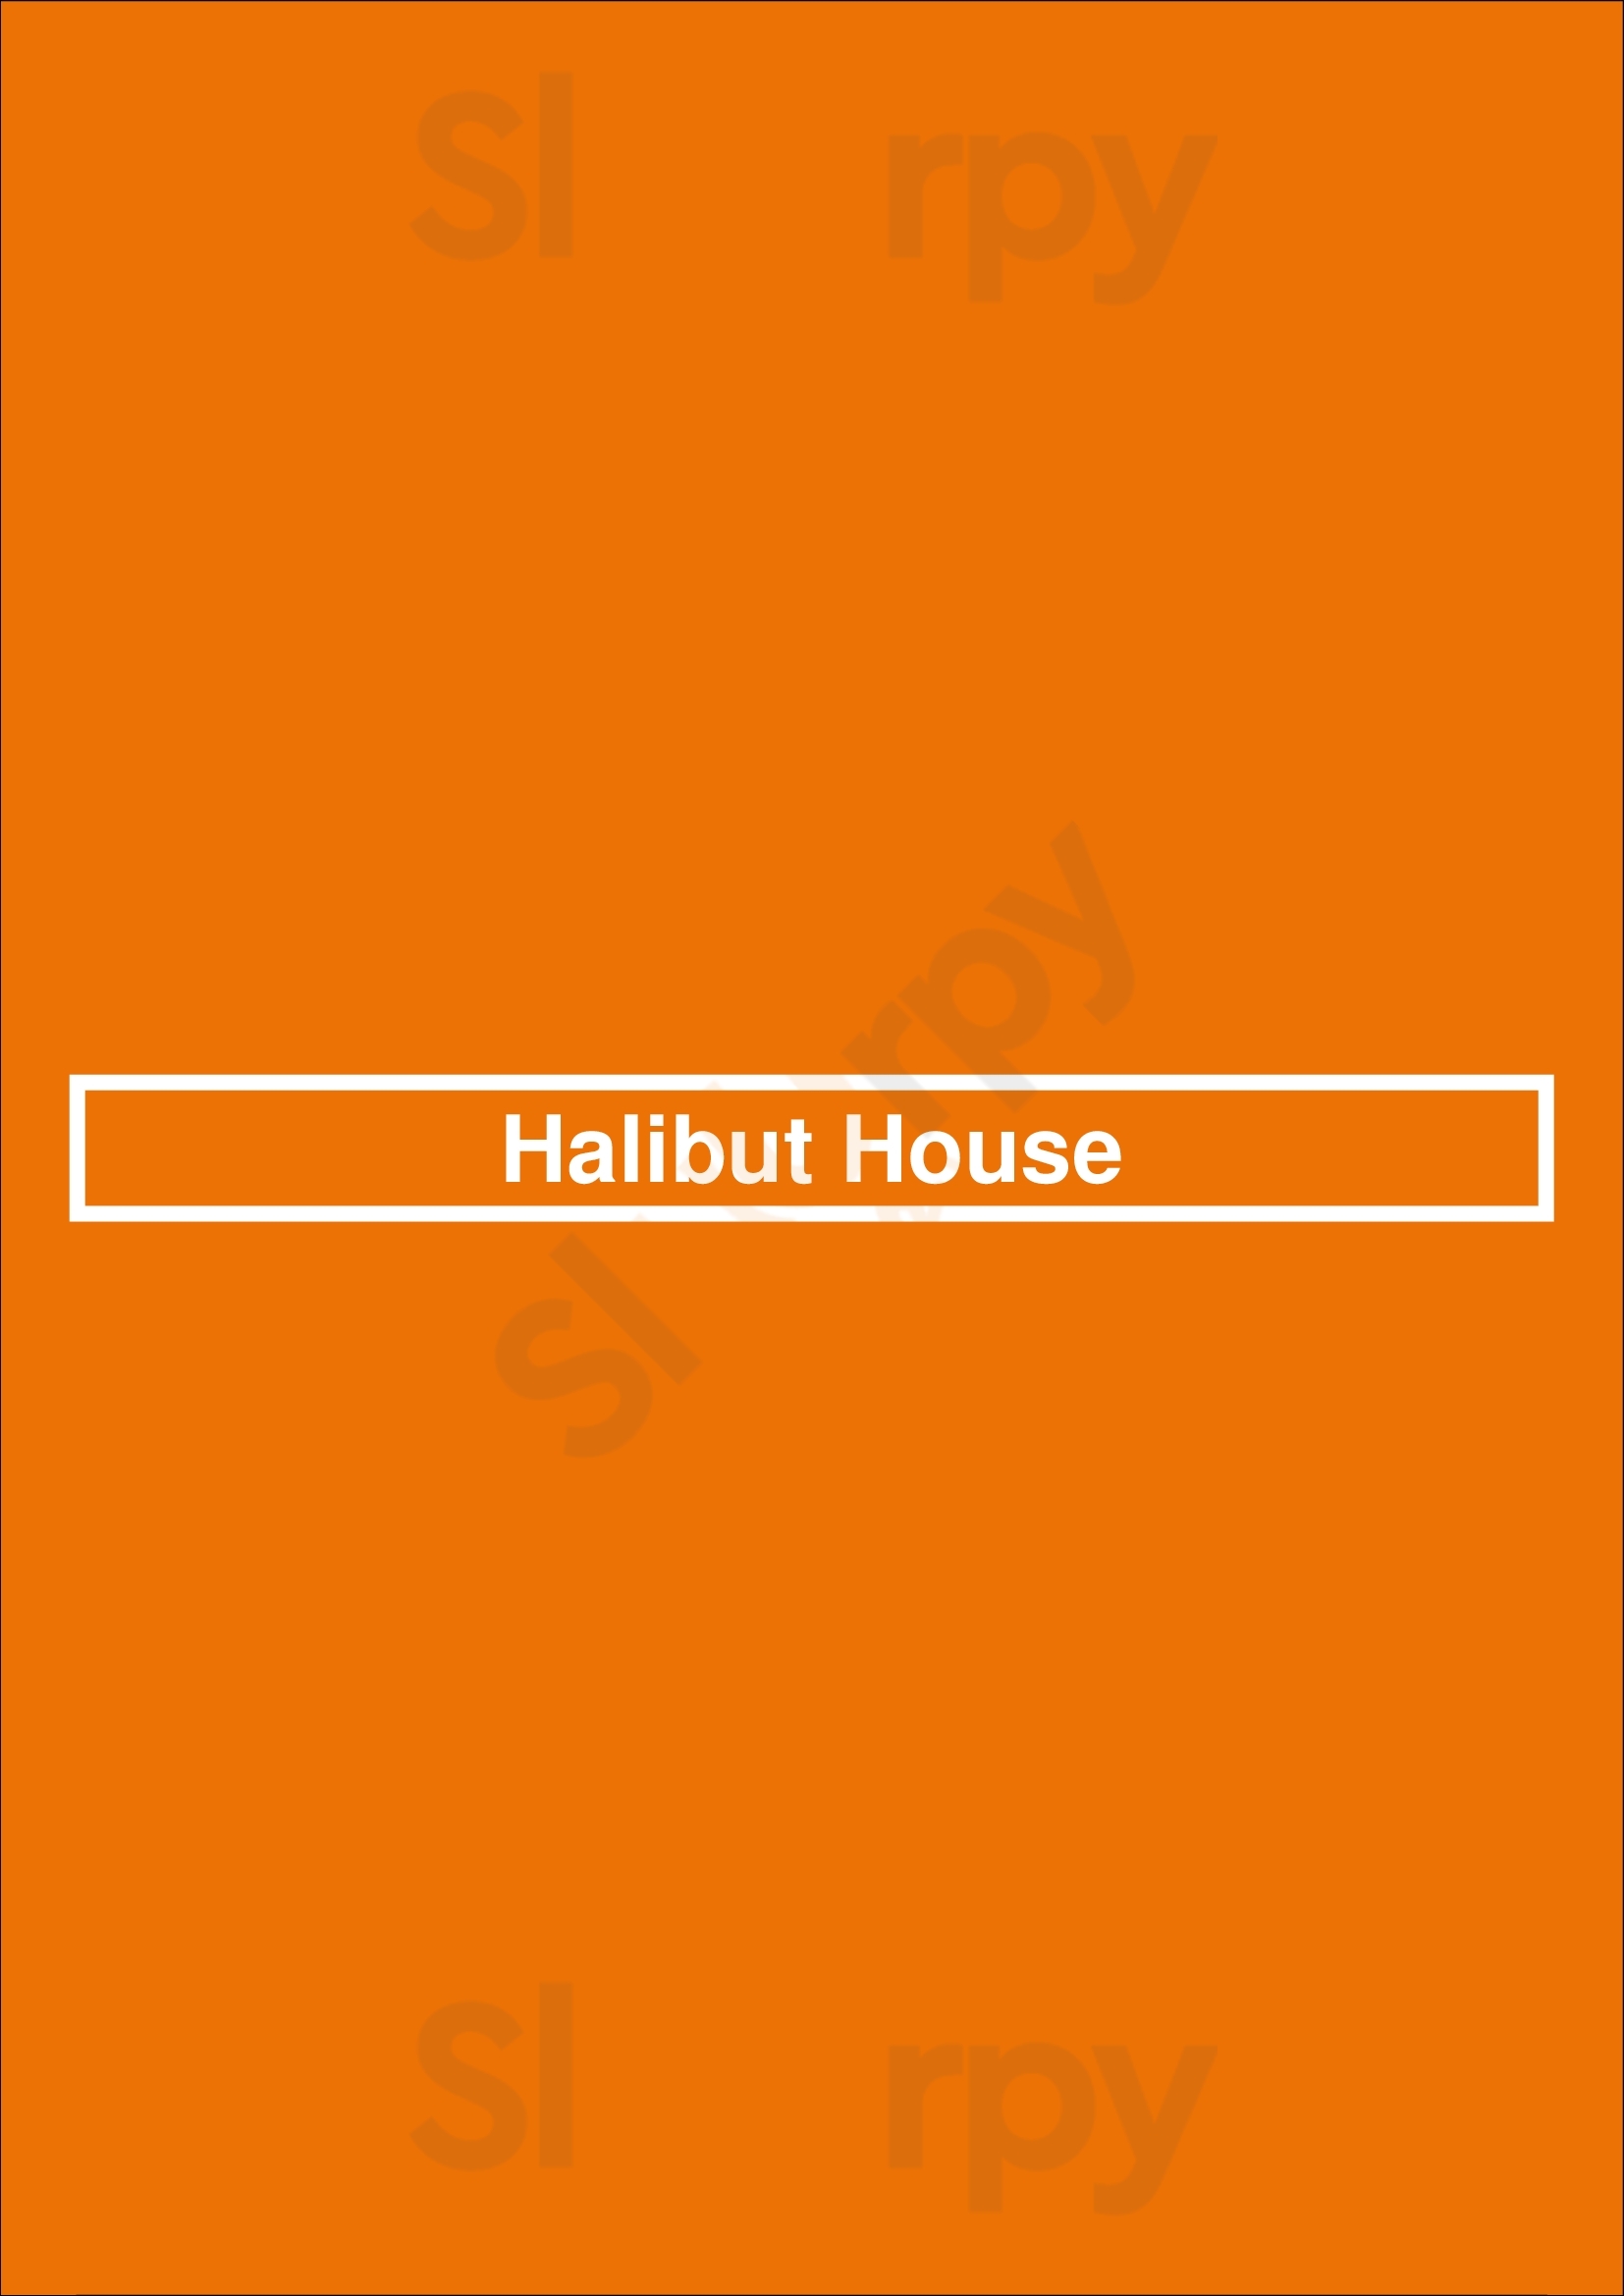 Halibut House Hamilton Menu - 1